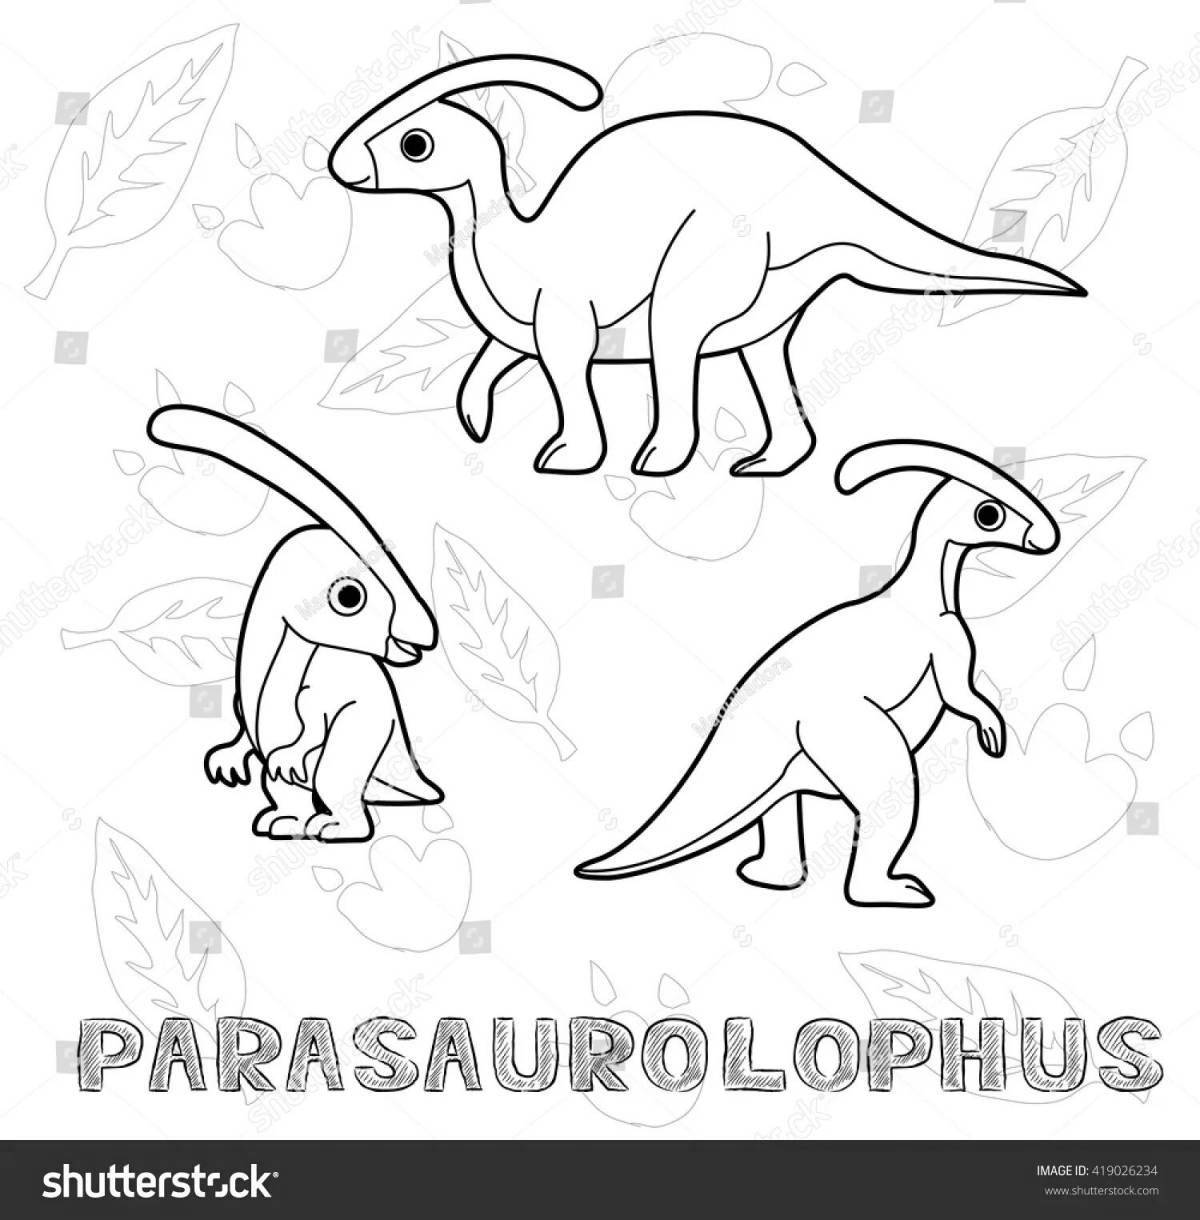 Amazing Parasaurolophus dinosaur coloring book